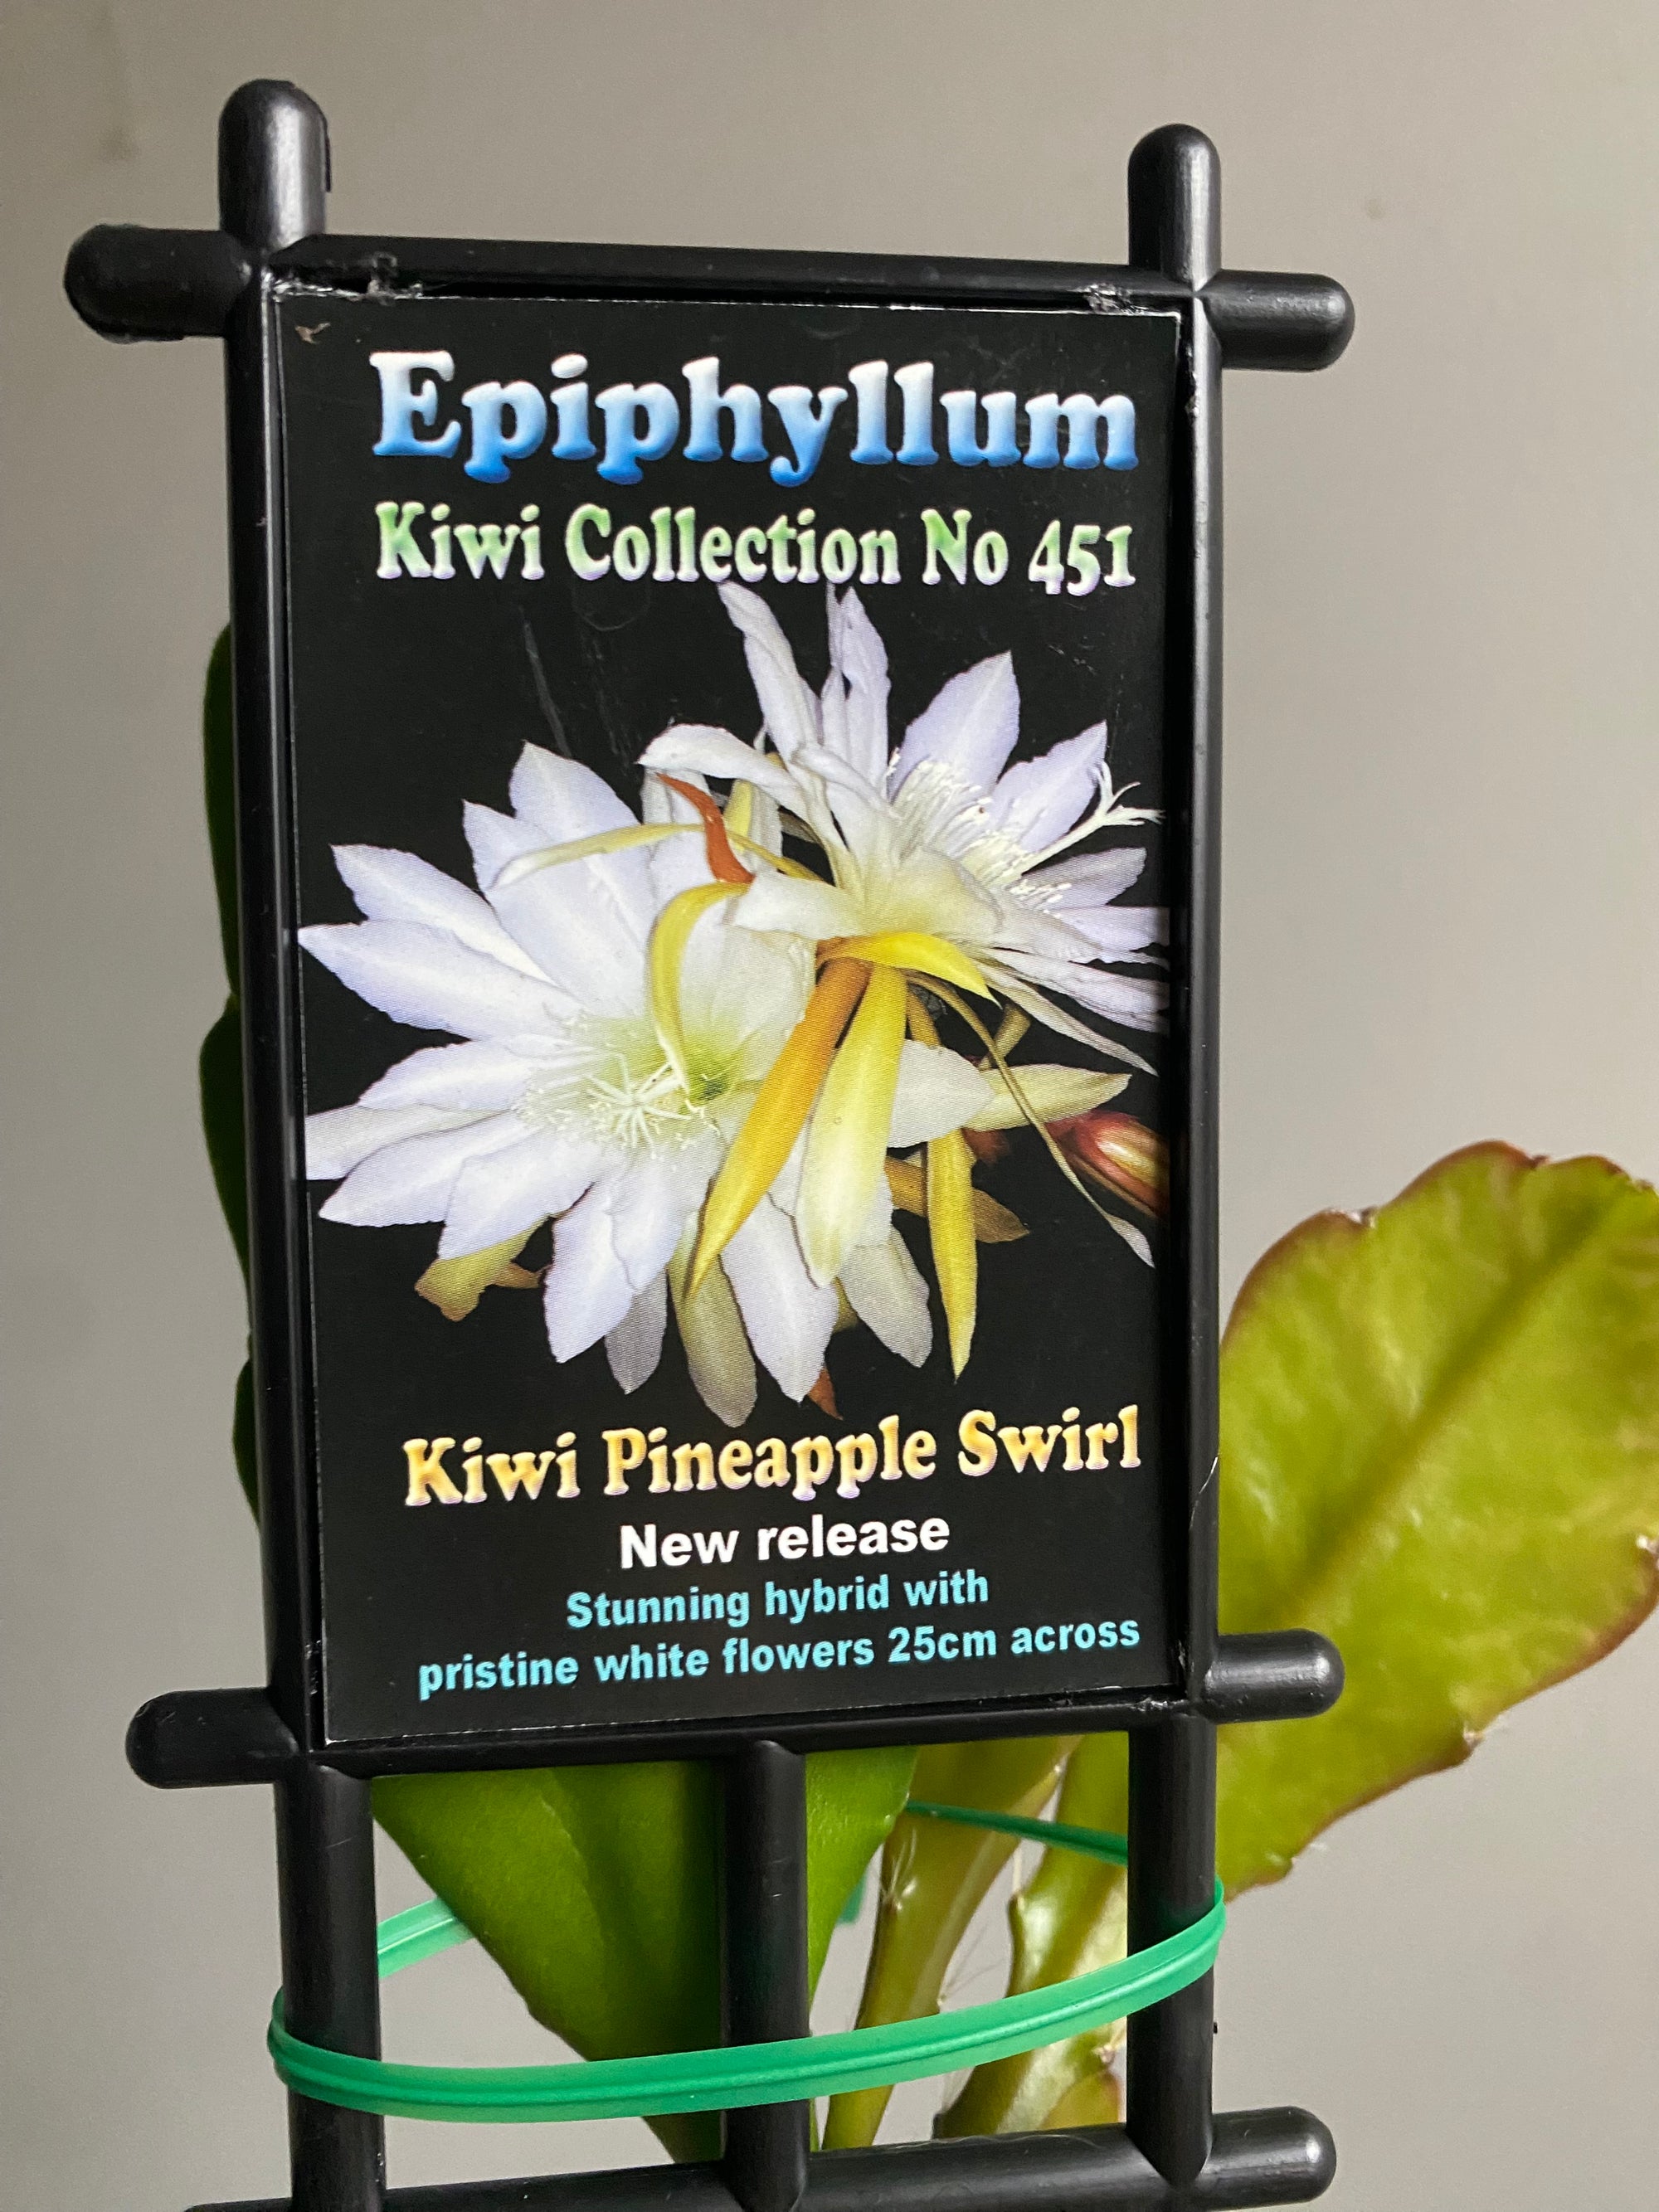 Epiphyllum 'The Orchid Cactus'- Kiwi Pineapple Swirl - Kiwi Collection No. 451